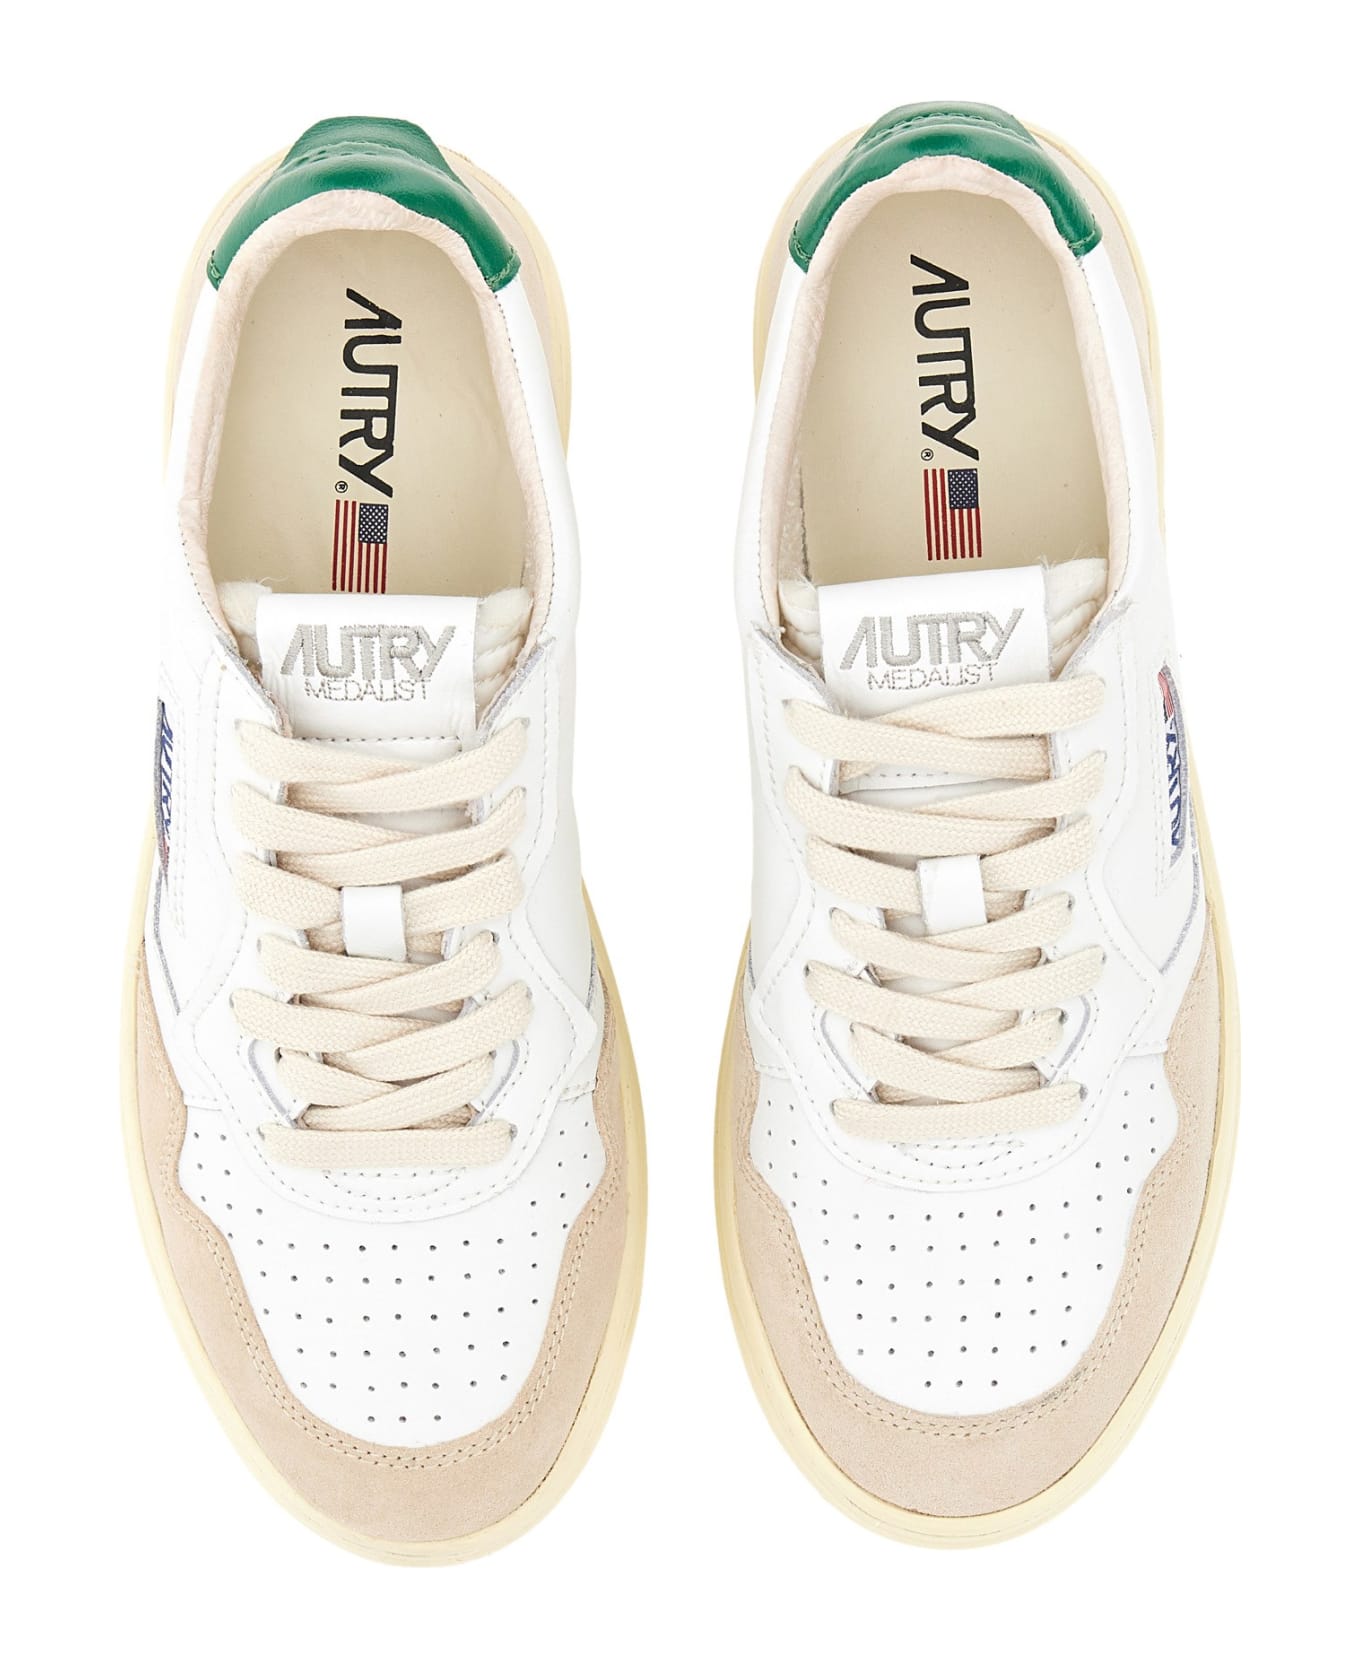 Autry Medalist Low Sneaker - White スニーカー